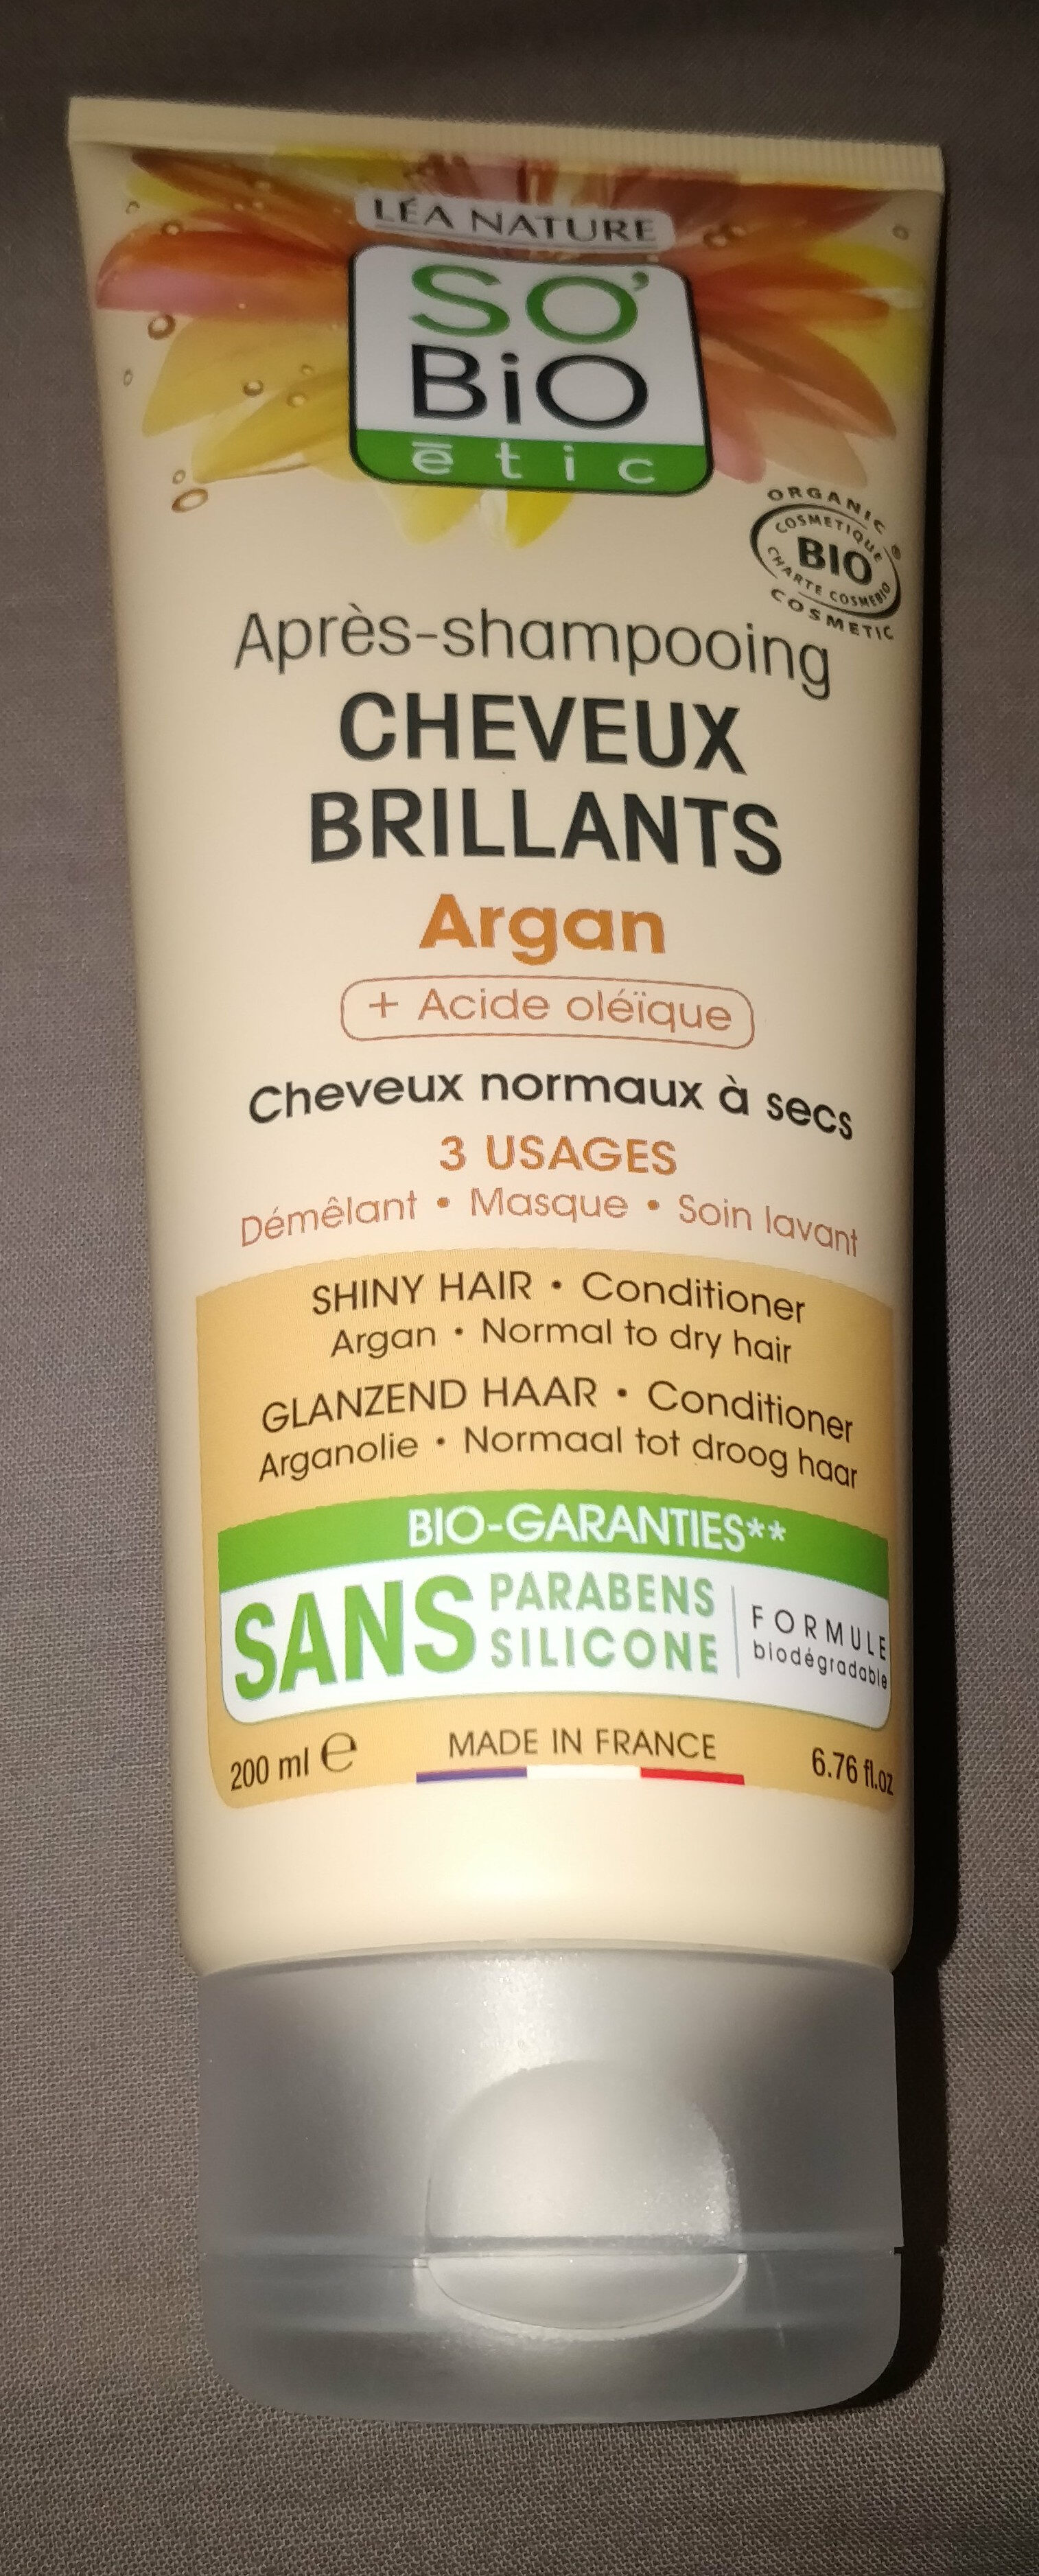 Après-Shampoing Cheveux Brillants - Produto - fr